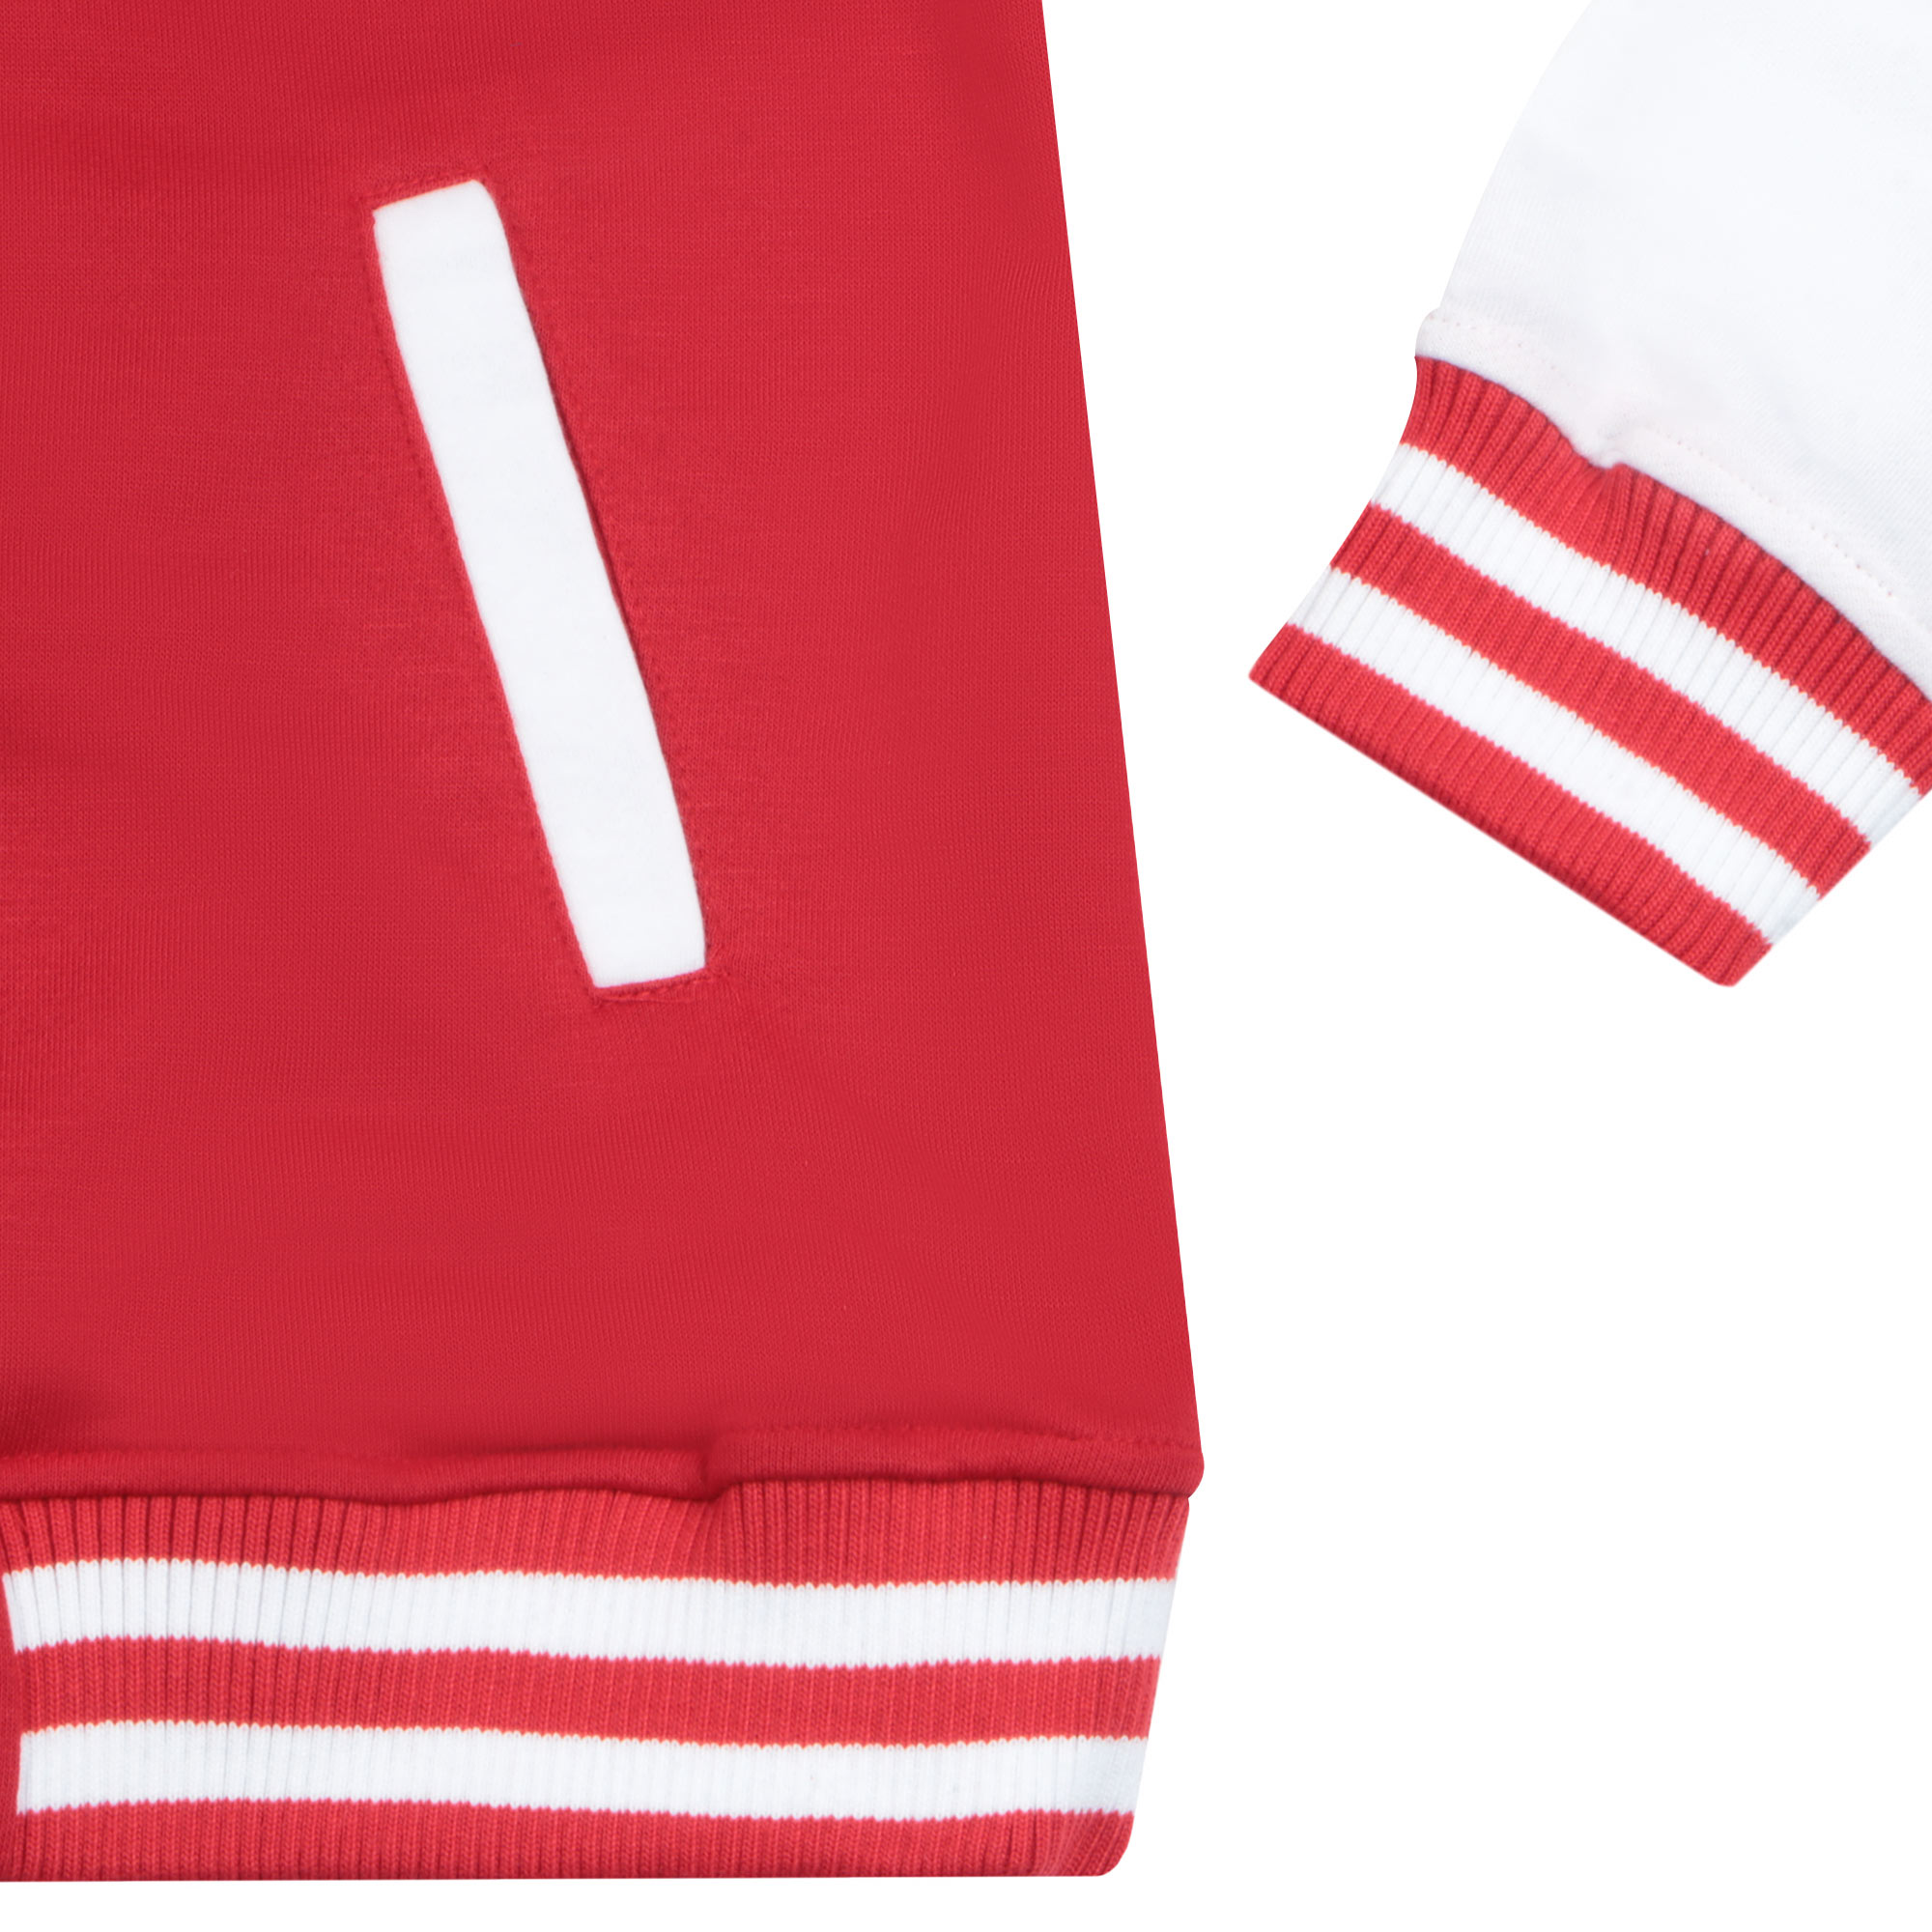 Бомбер Garment красный/белый XL полиэстер, размер XL - фото 2